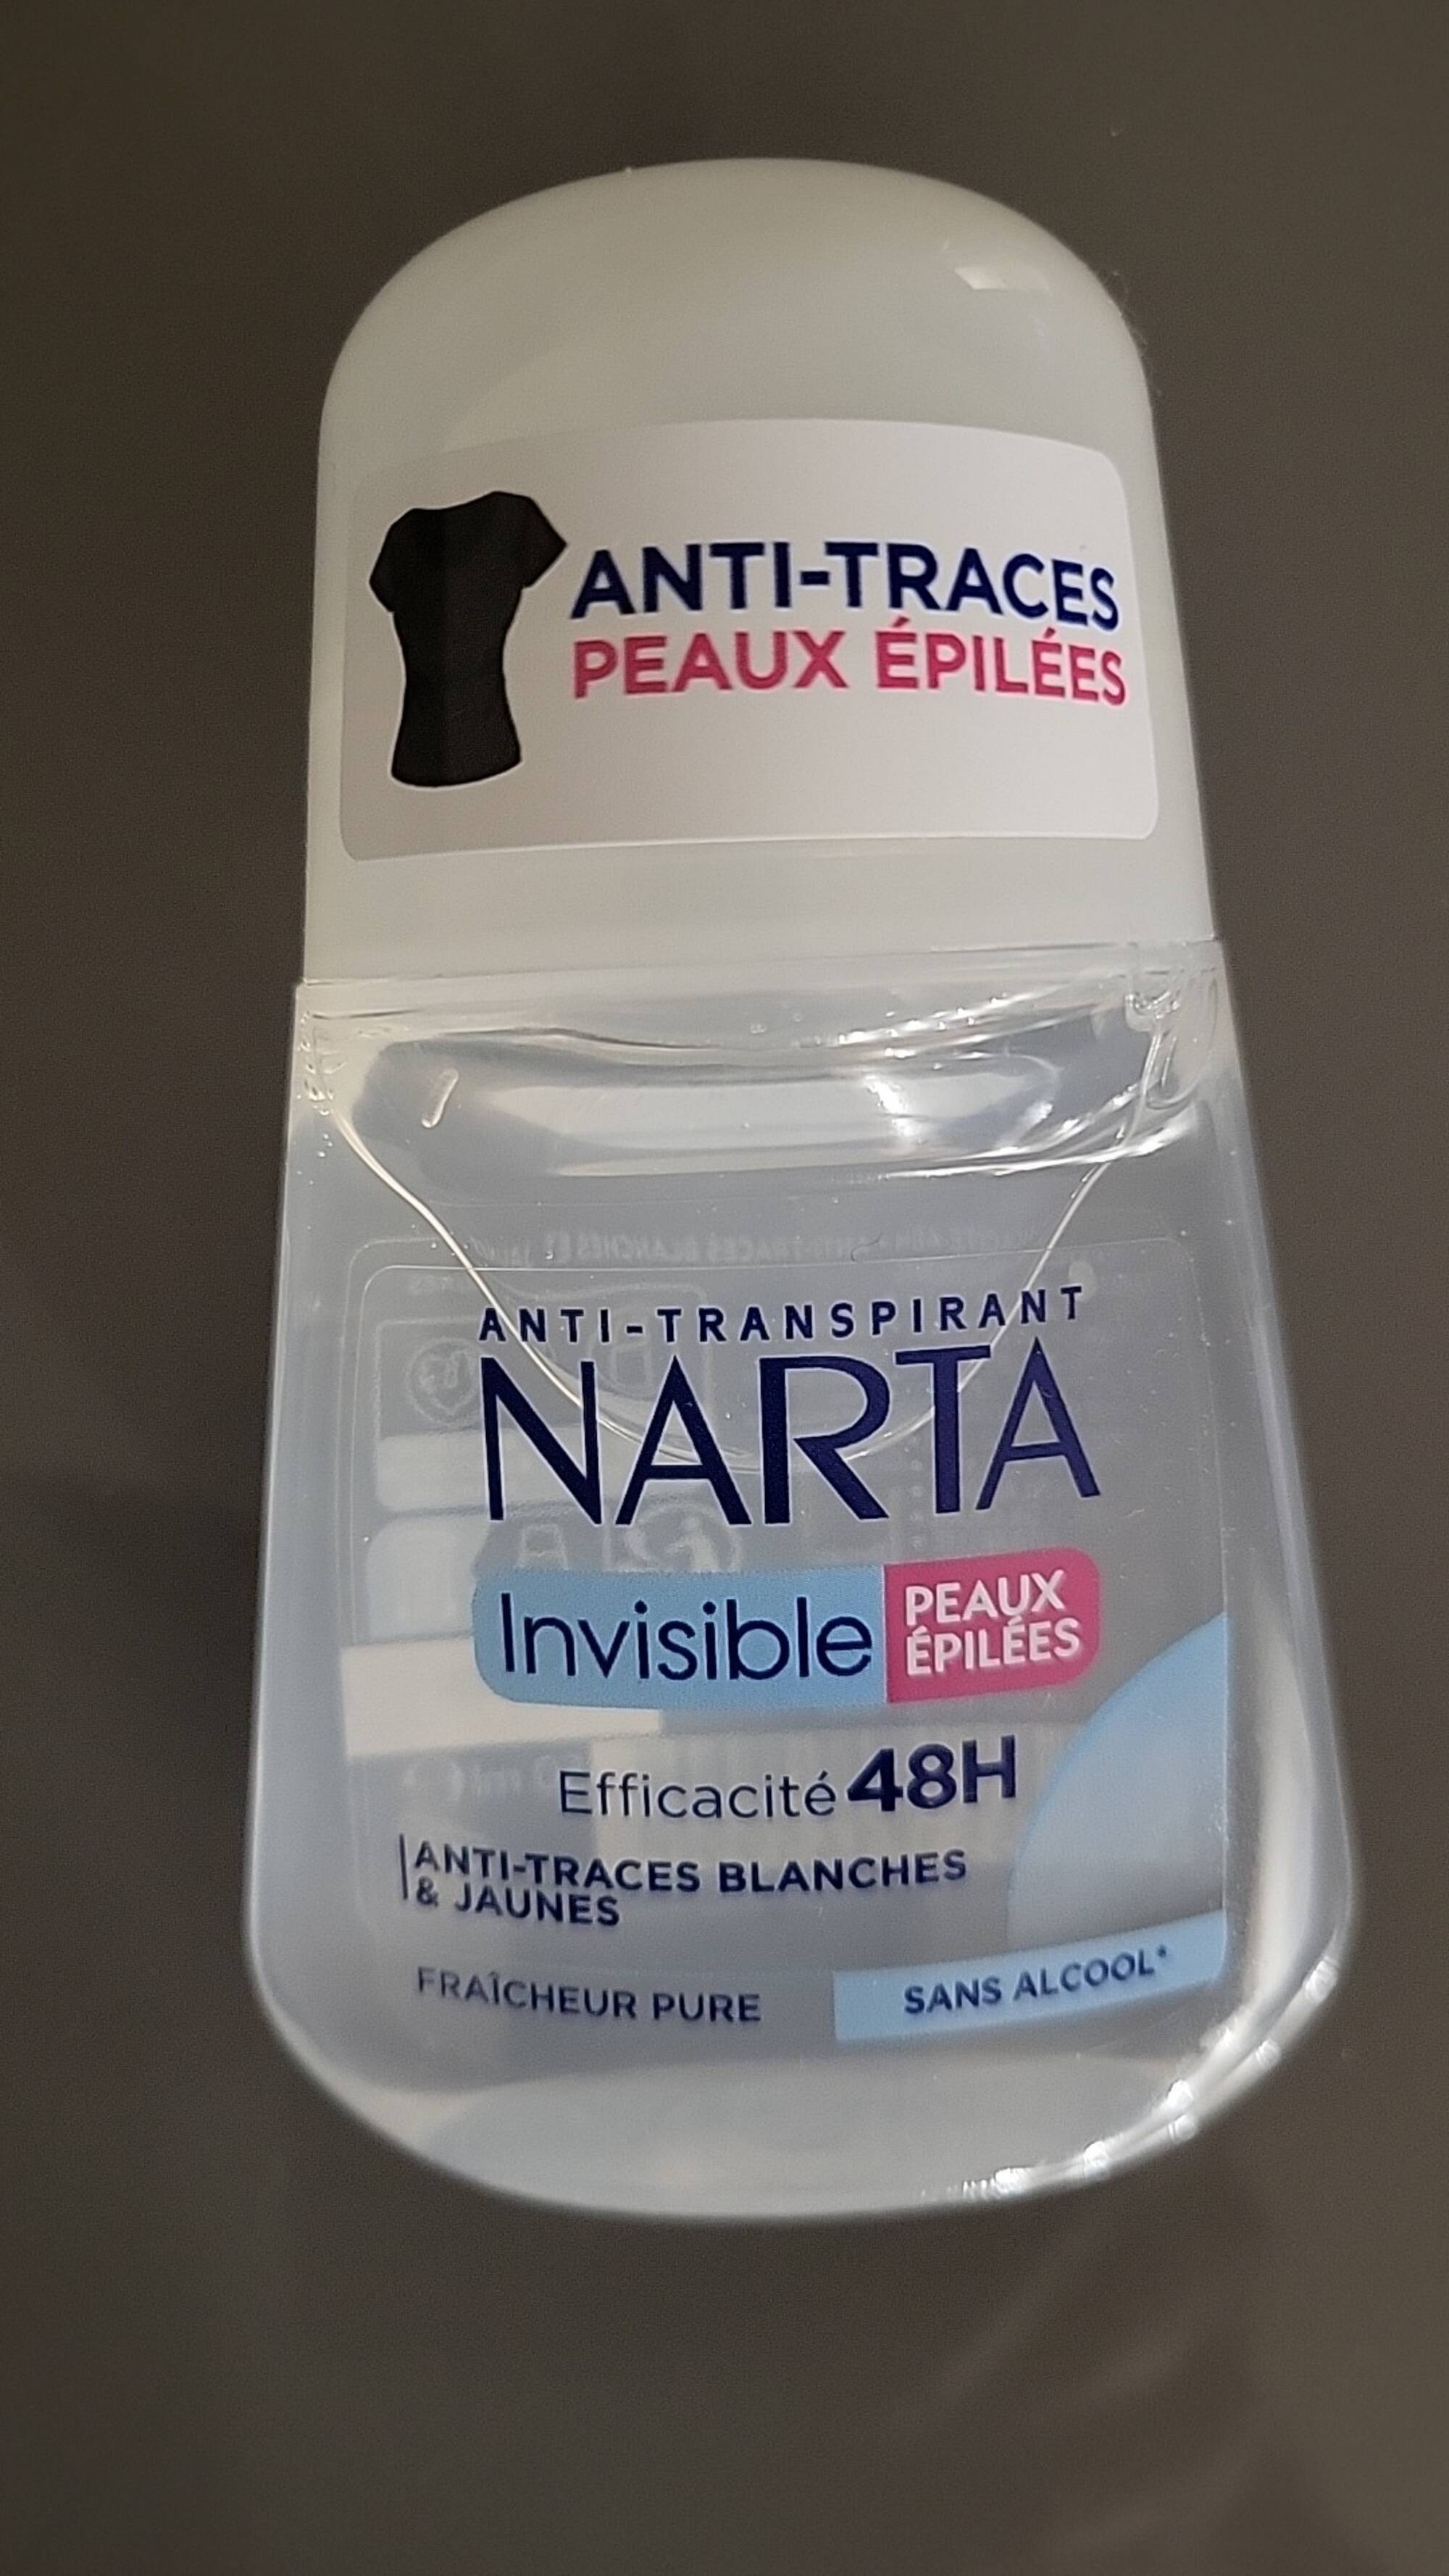 NARTA - Anti-transpirant invisible efficacité 48h